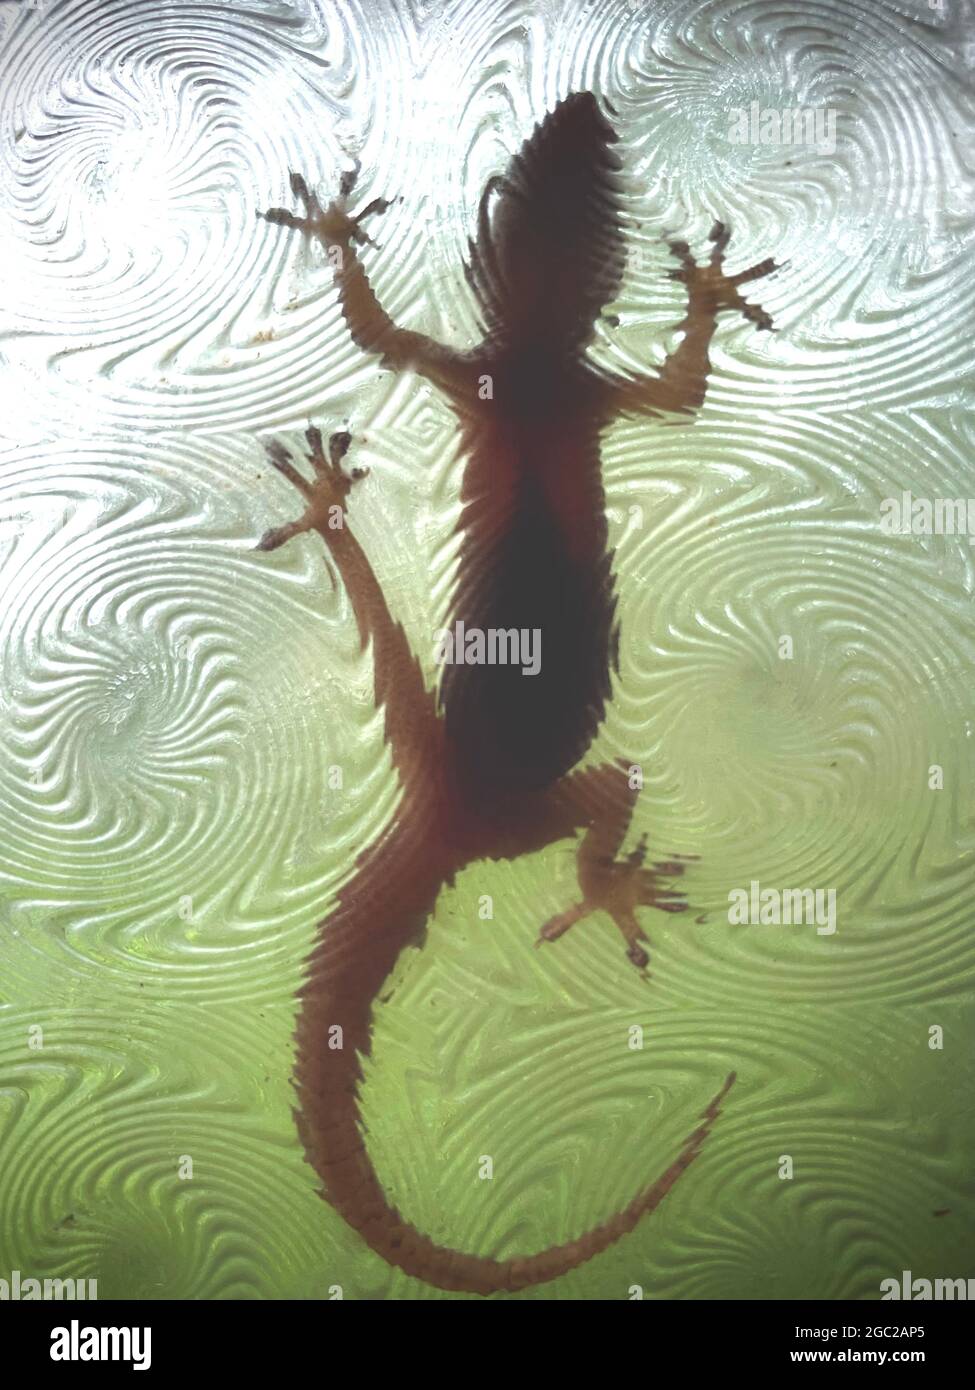 lizard behind a window pane Stock Photo